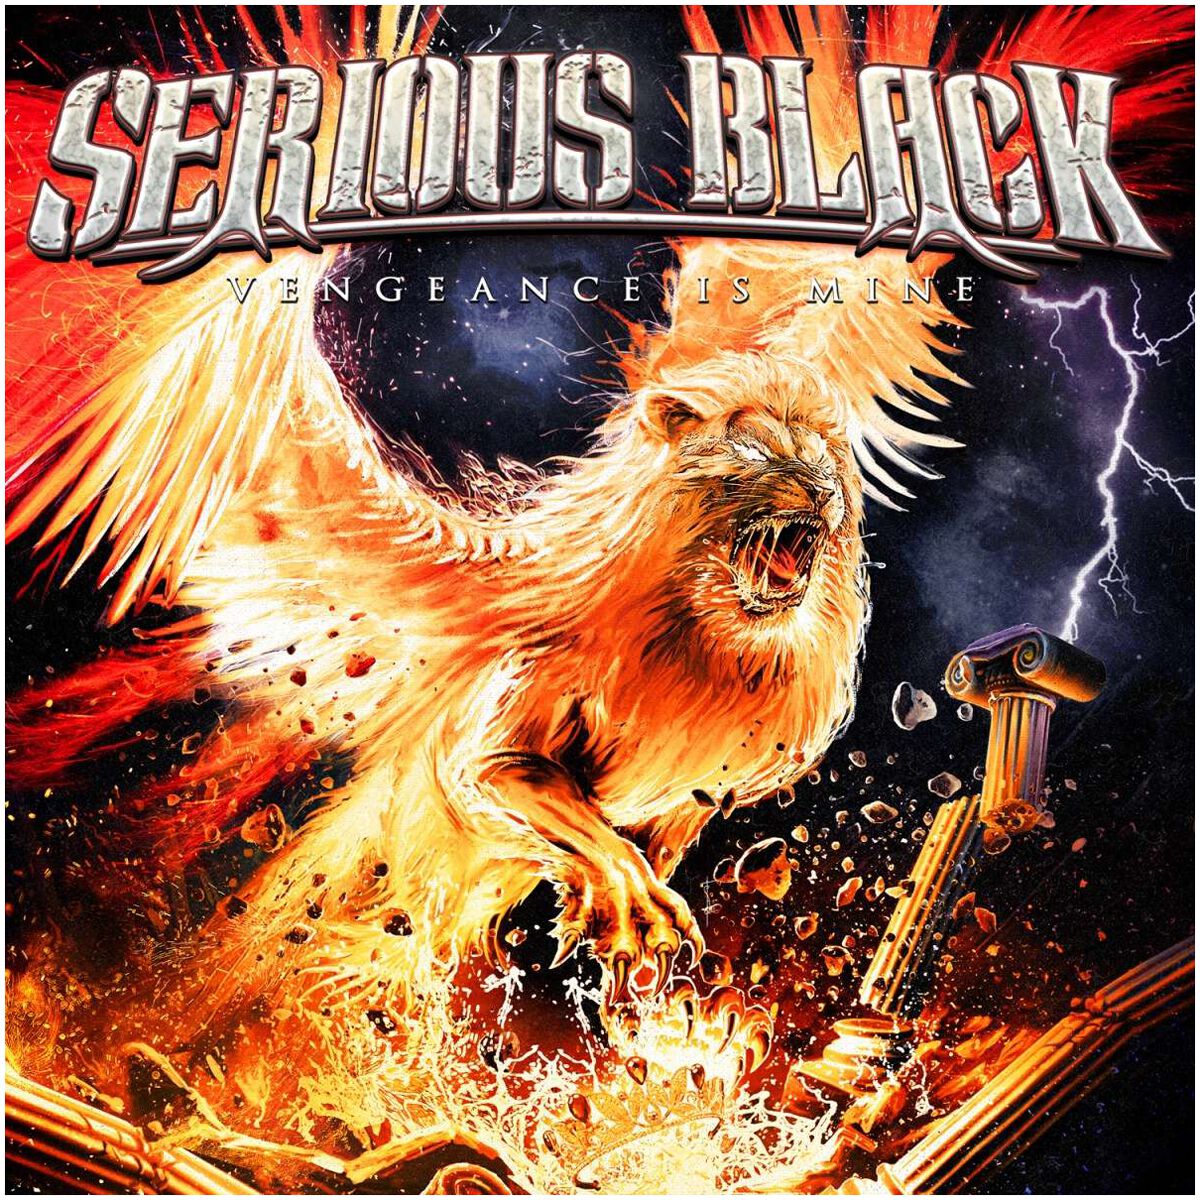 Serious Black Vengeance is mine CD multicolor